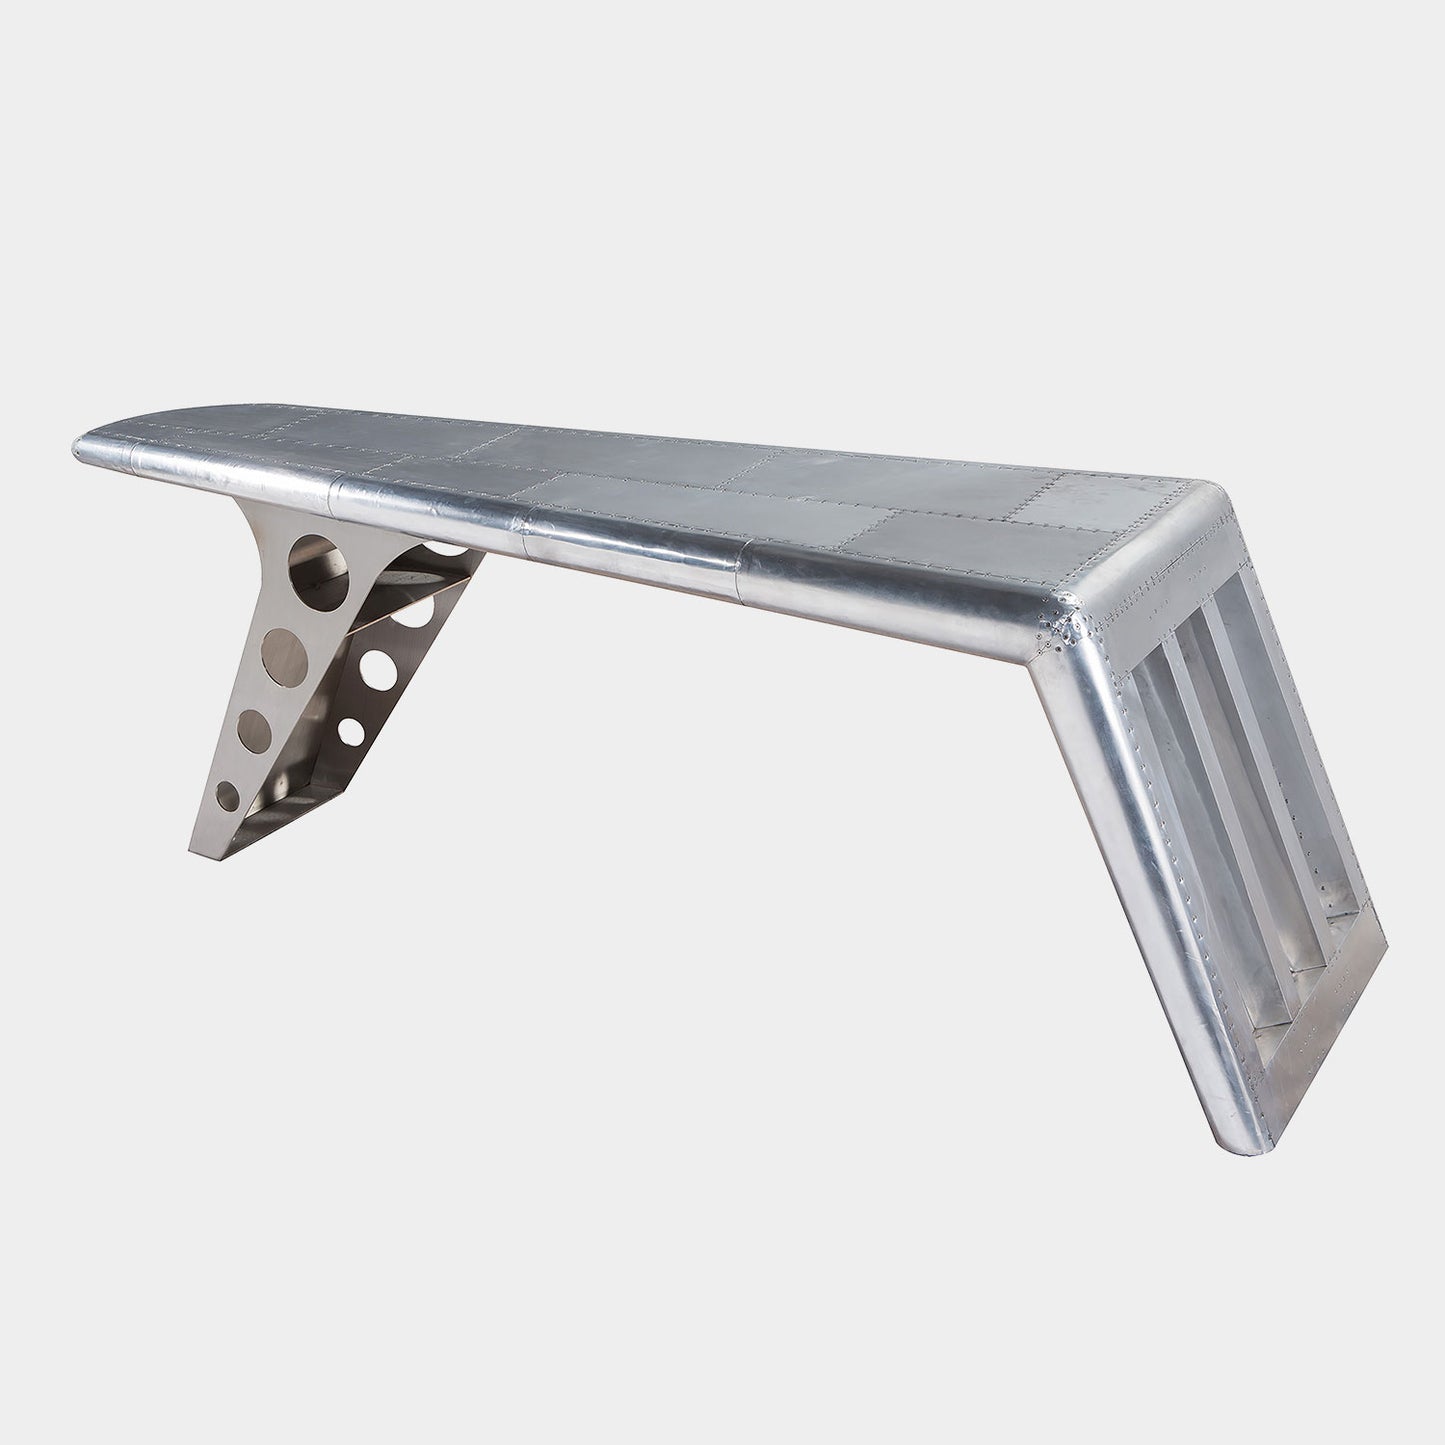 Marauder Wing Desk (large)- Aero-aluminium and stainless steel leg